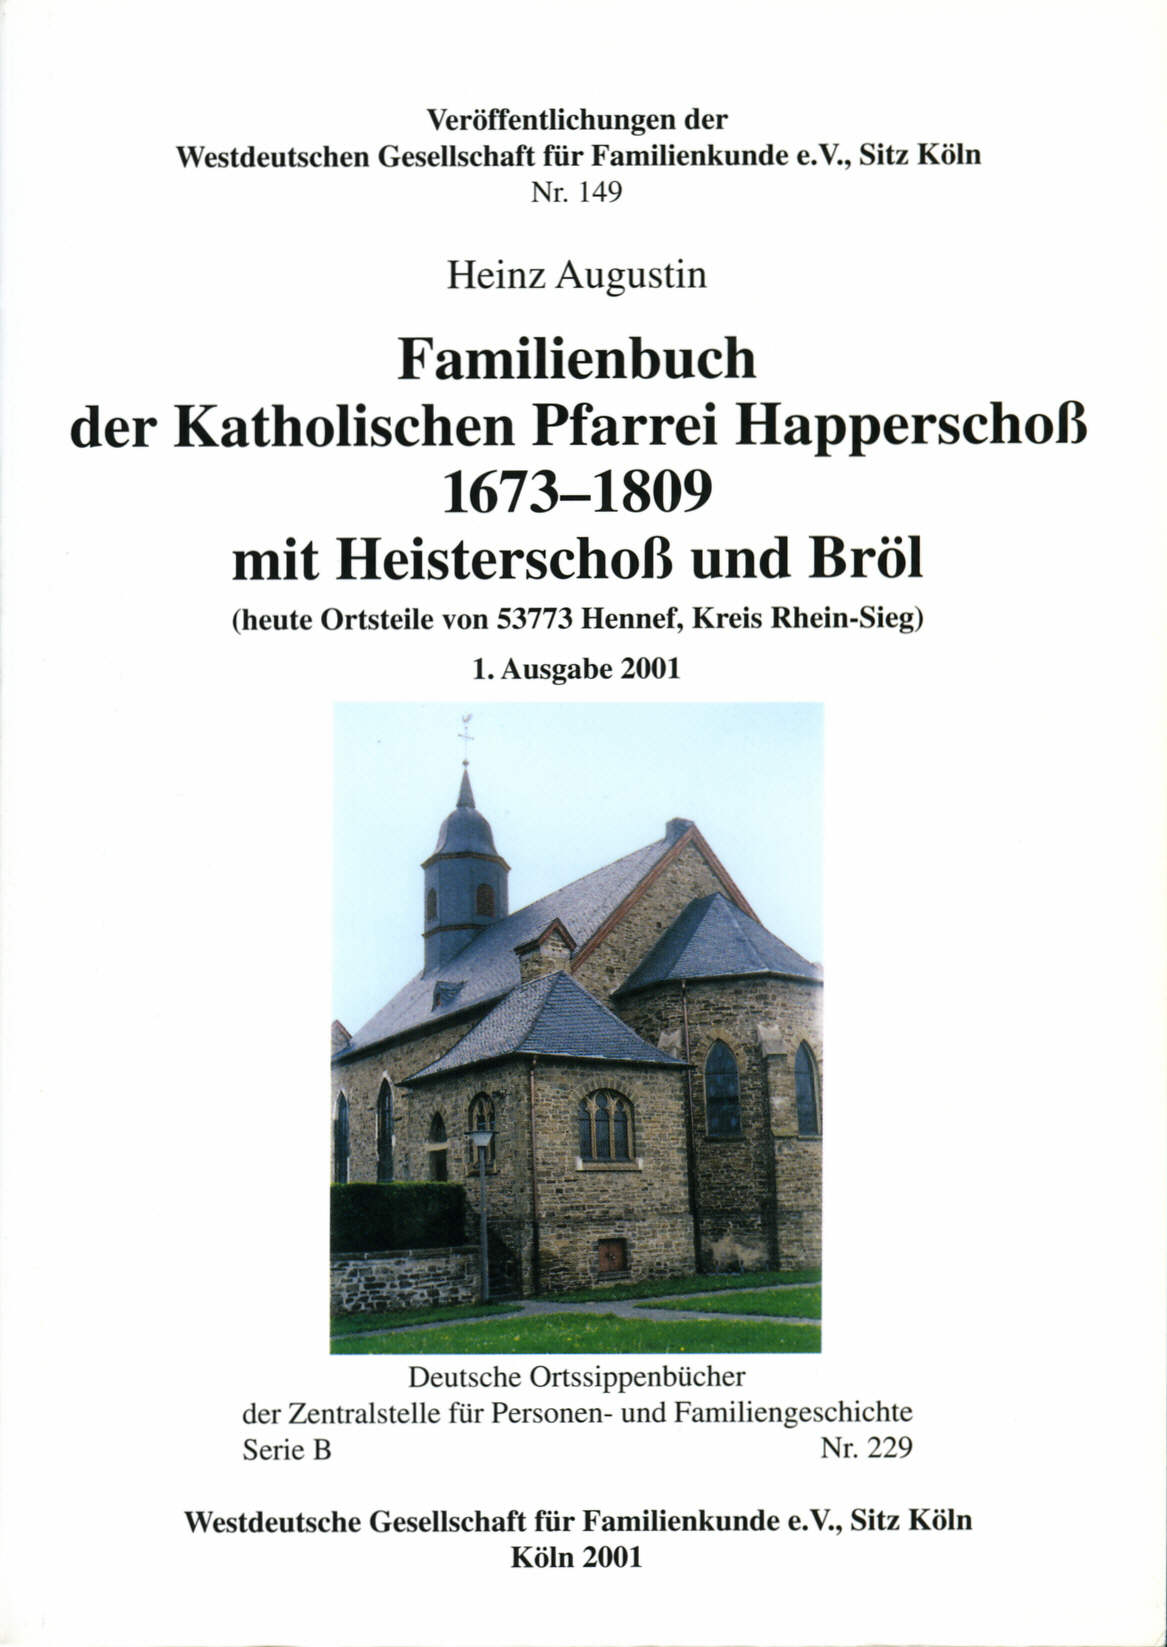 Kath. Familienbuch Happerschoß 1673-1809